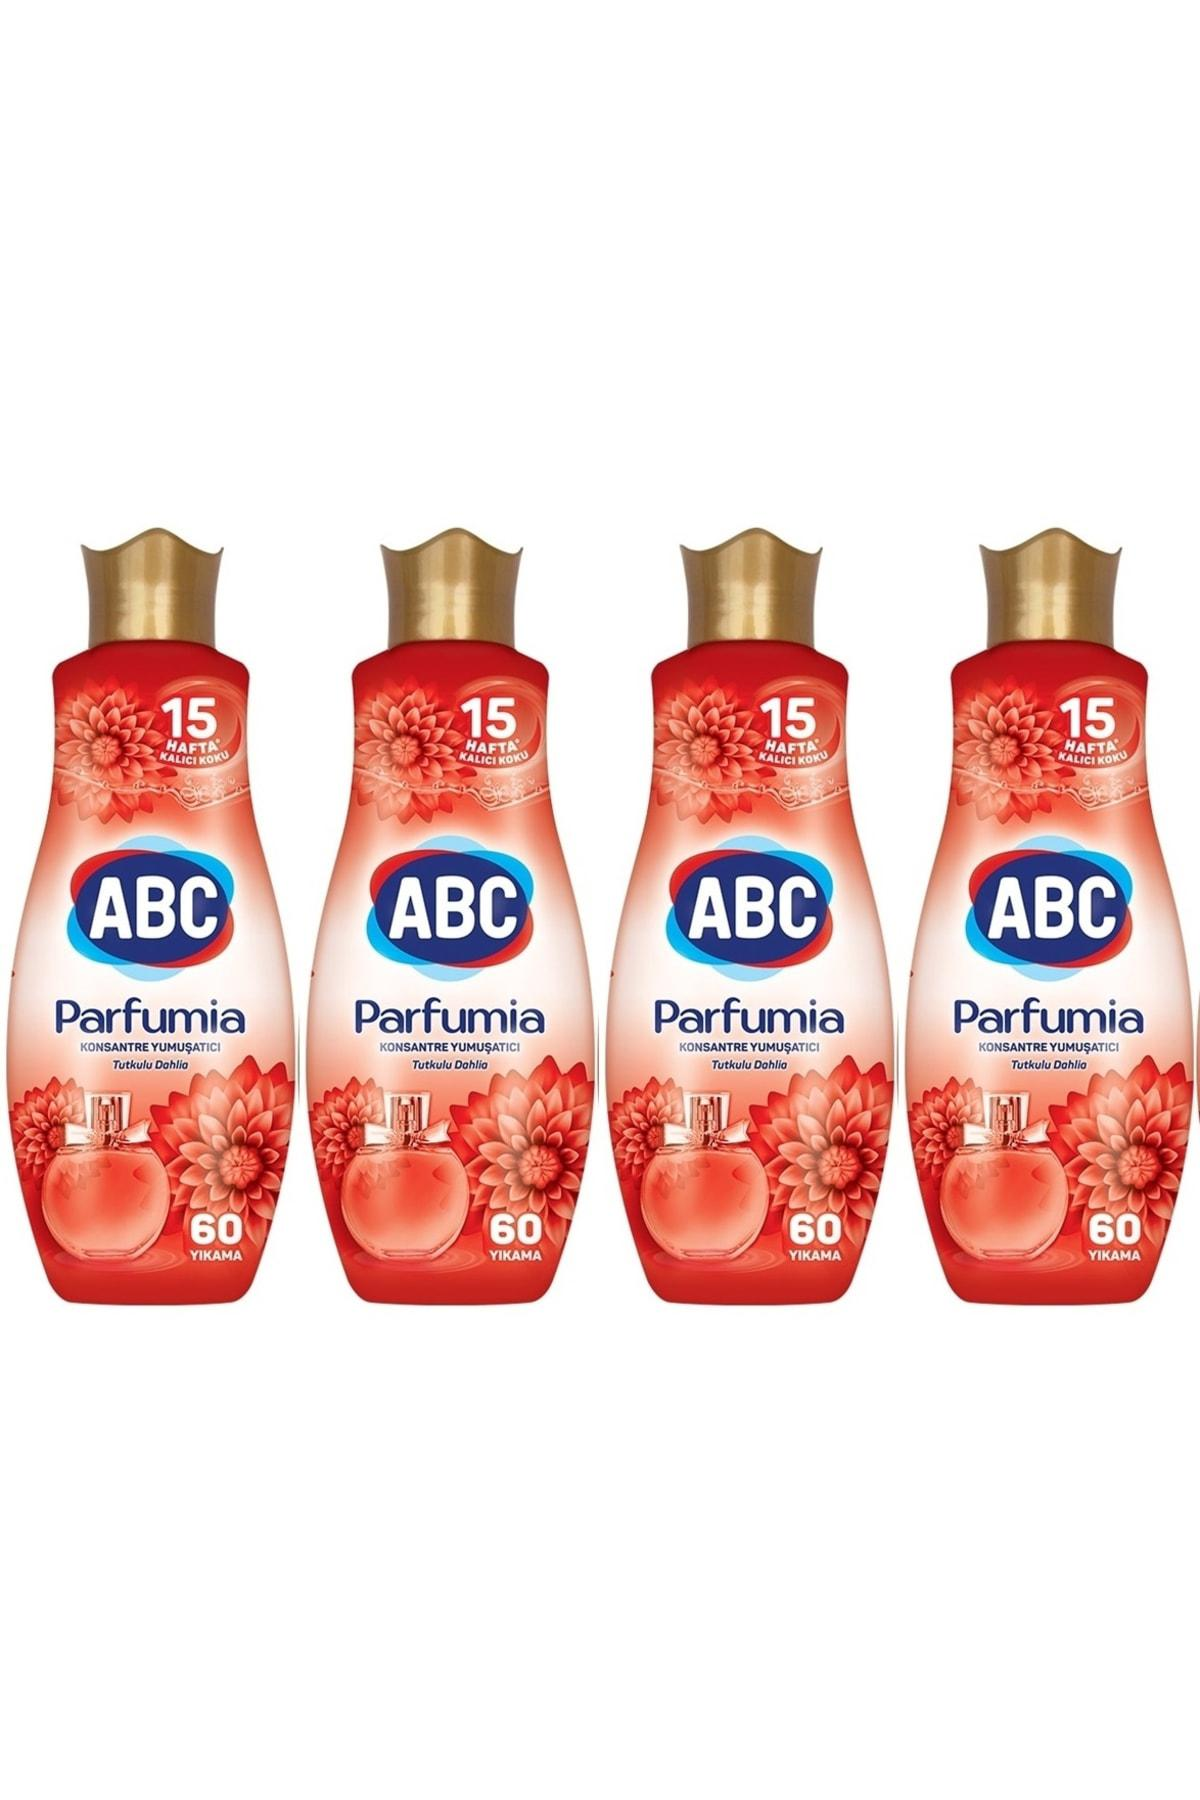 ABC Parfumia Konsantre 60 Yıkama Yumuşatıcı 4 x 1.44 lt